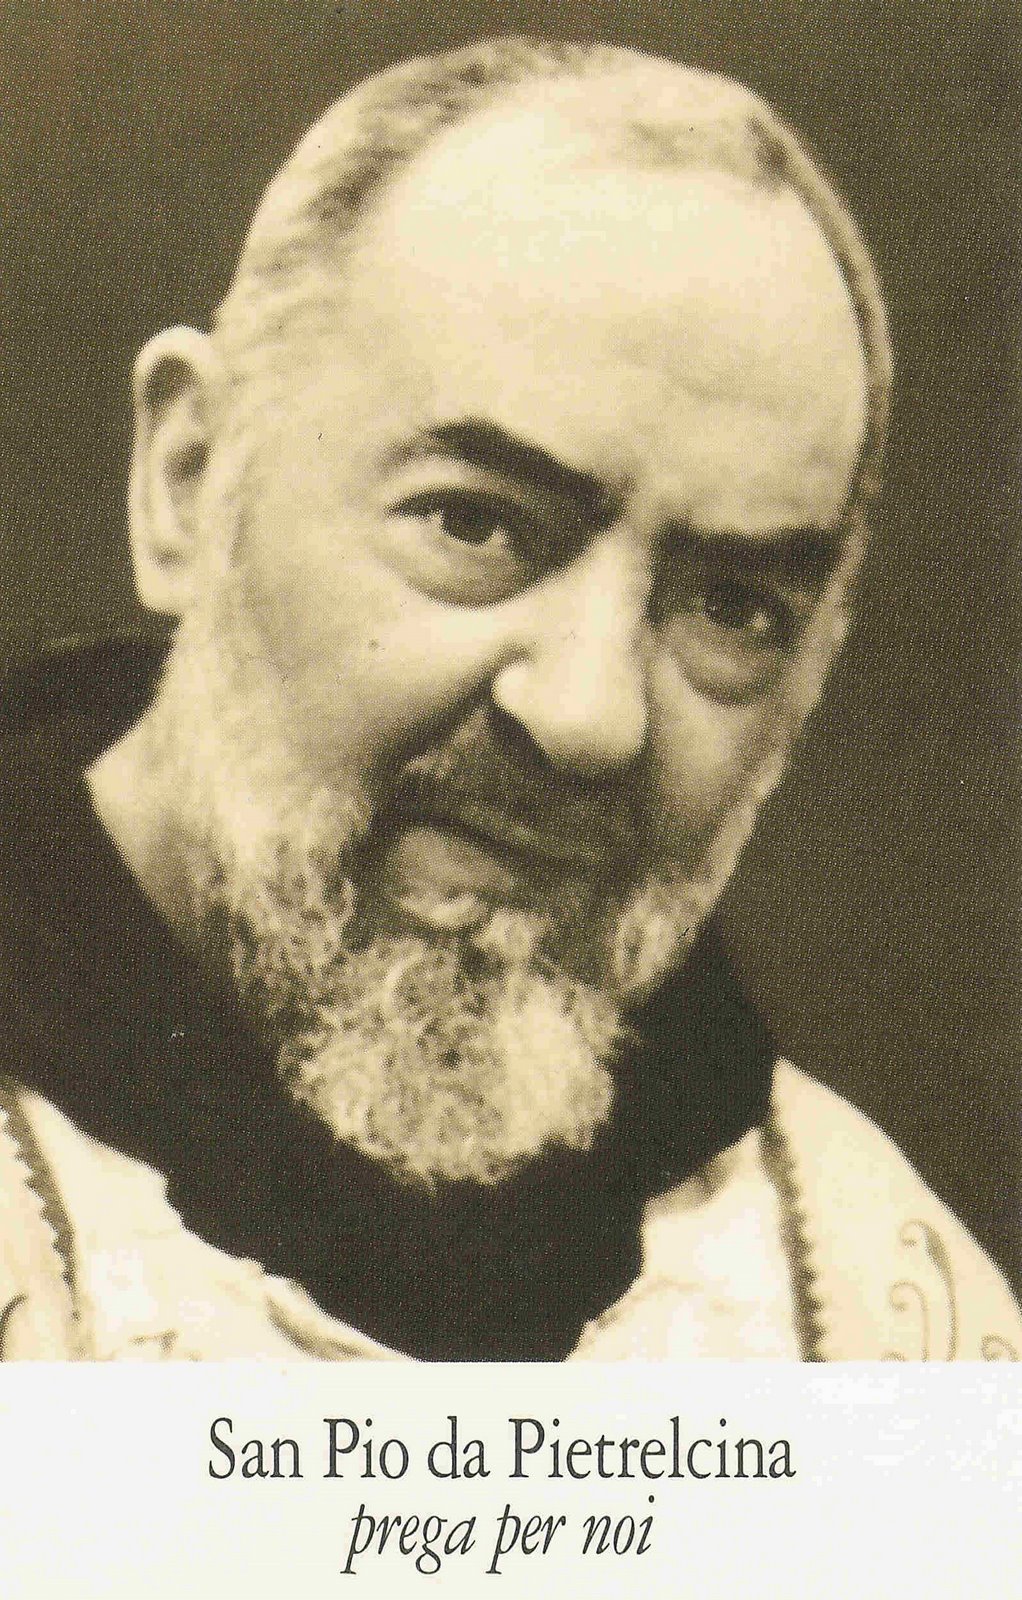 San Padre Pio da Petrelcine...